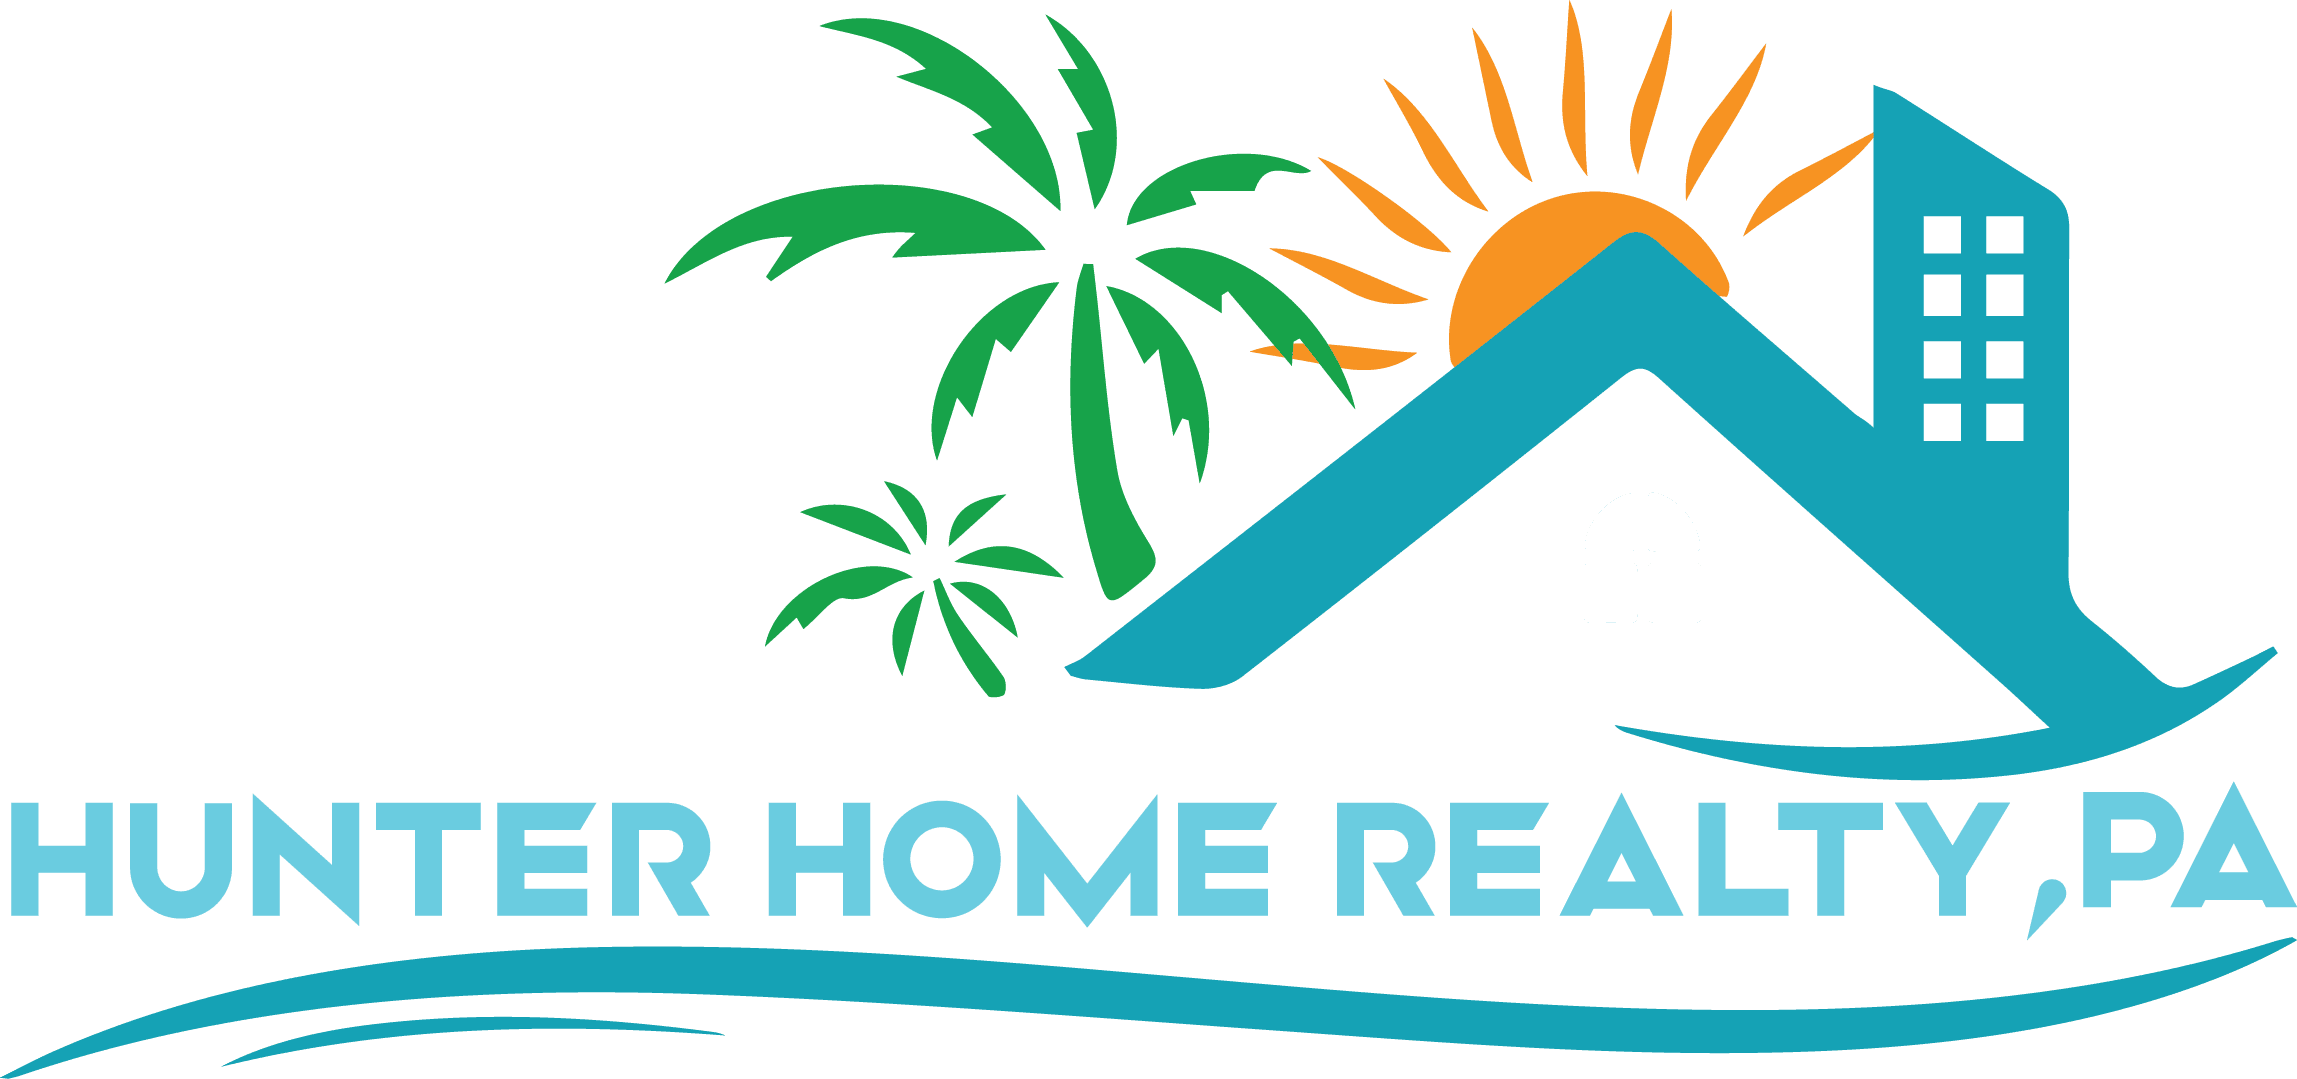 Hunter Home Realty, PA logo